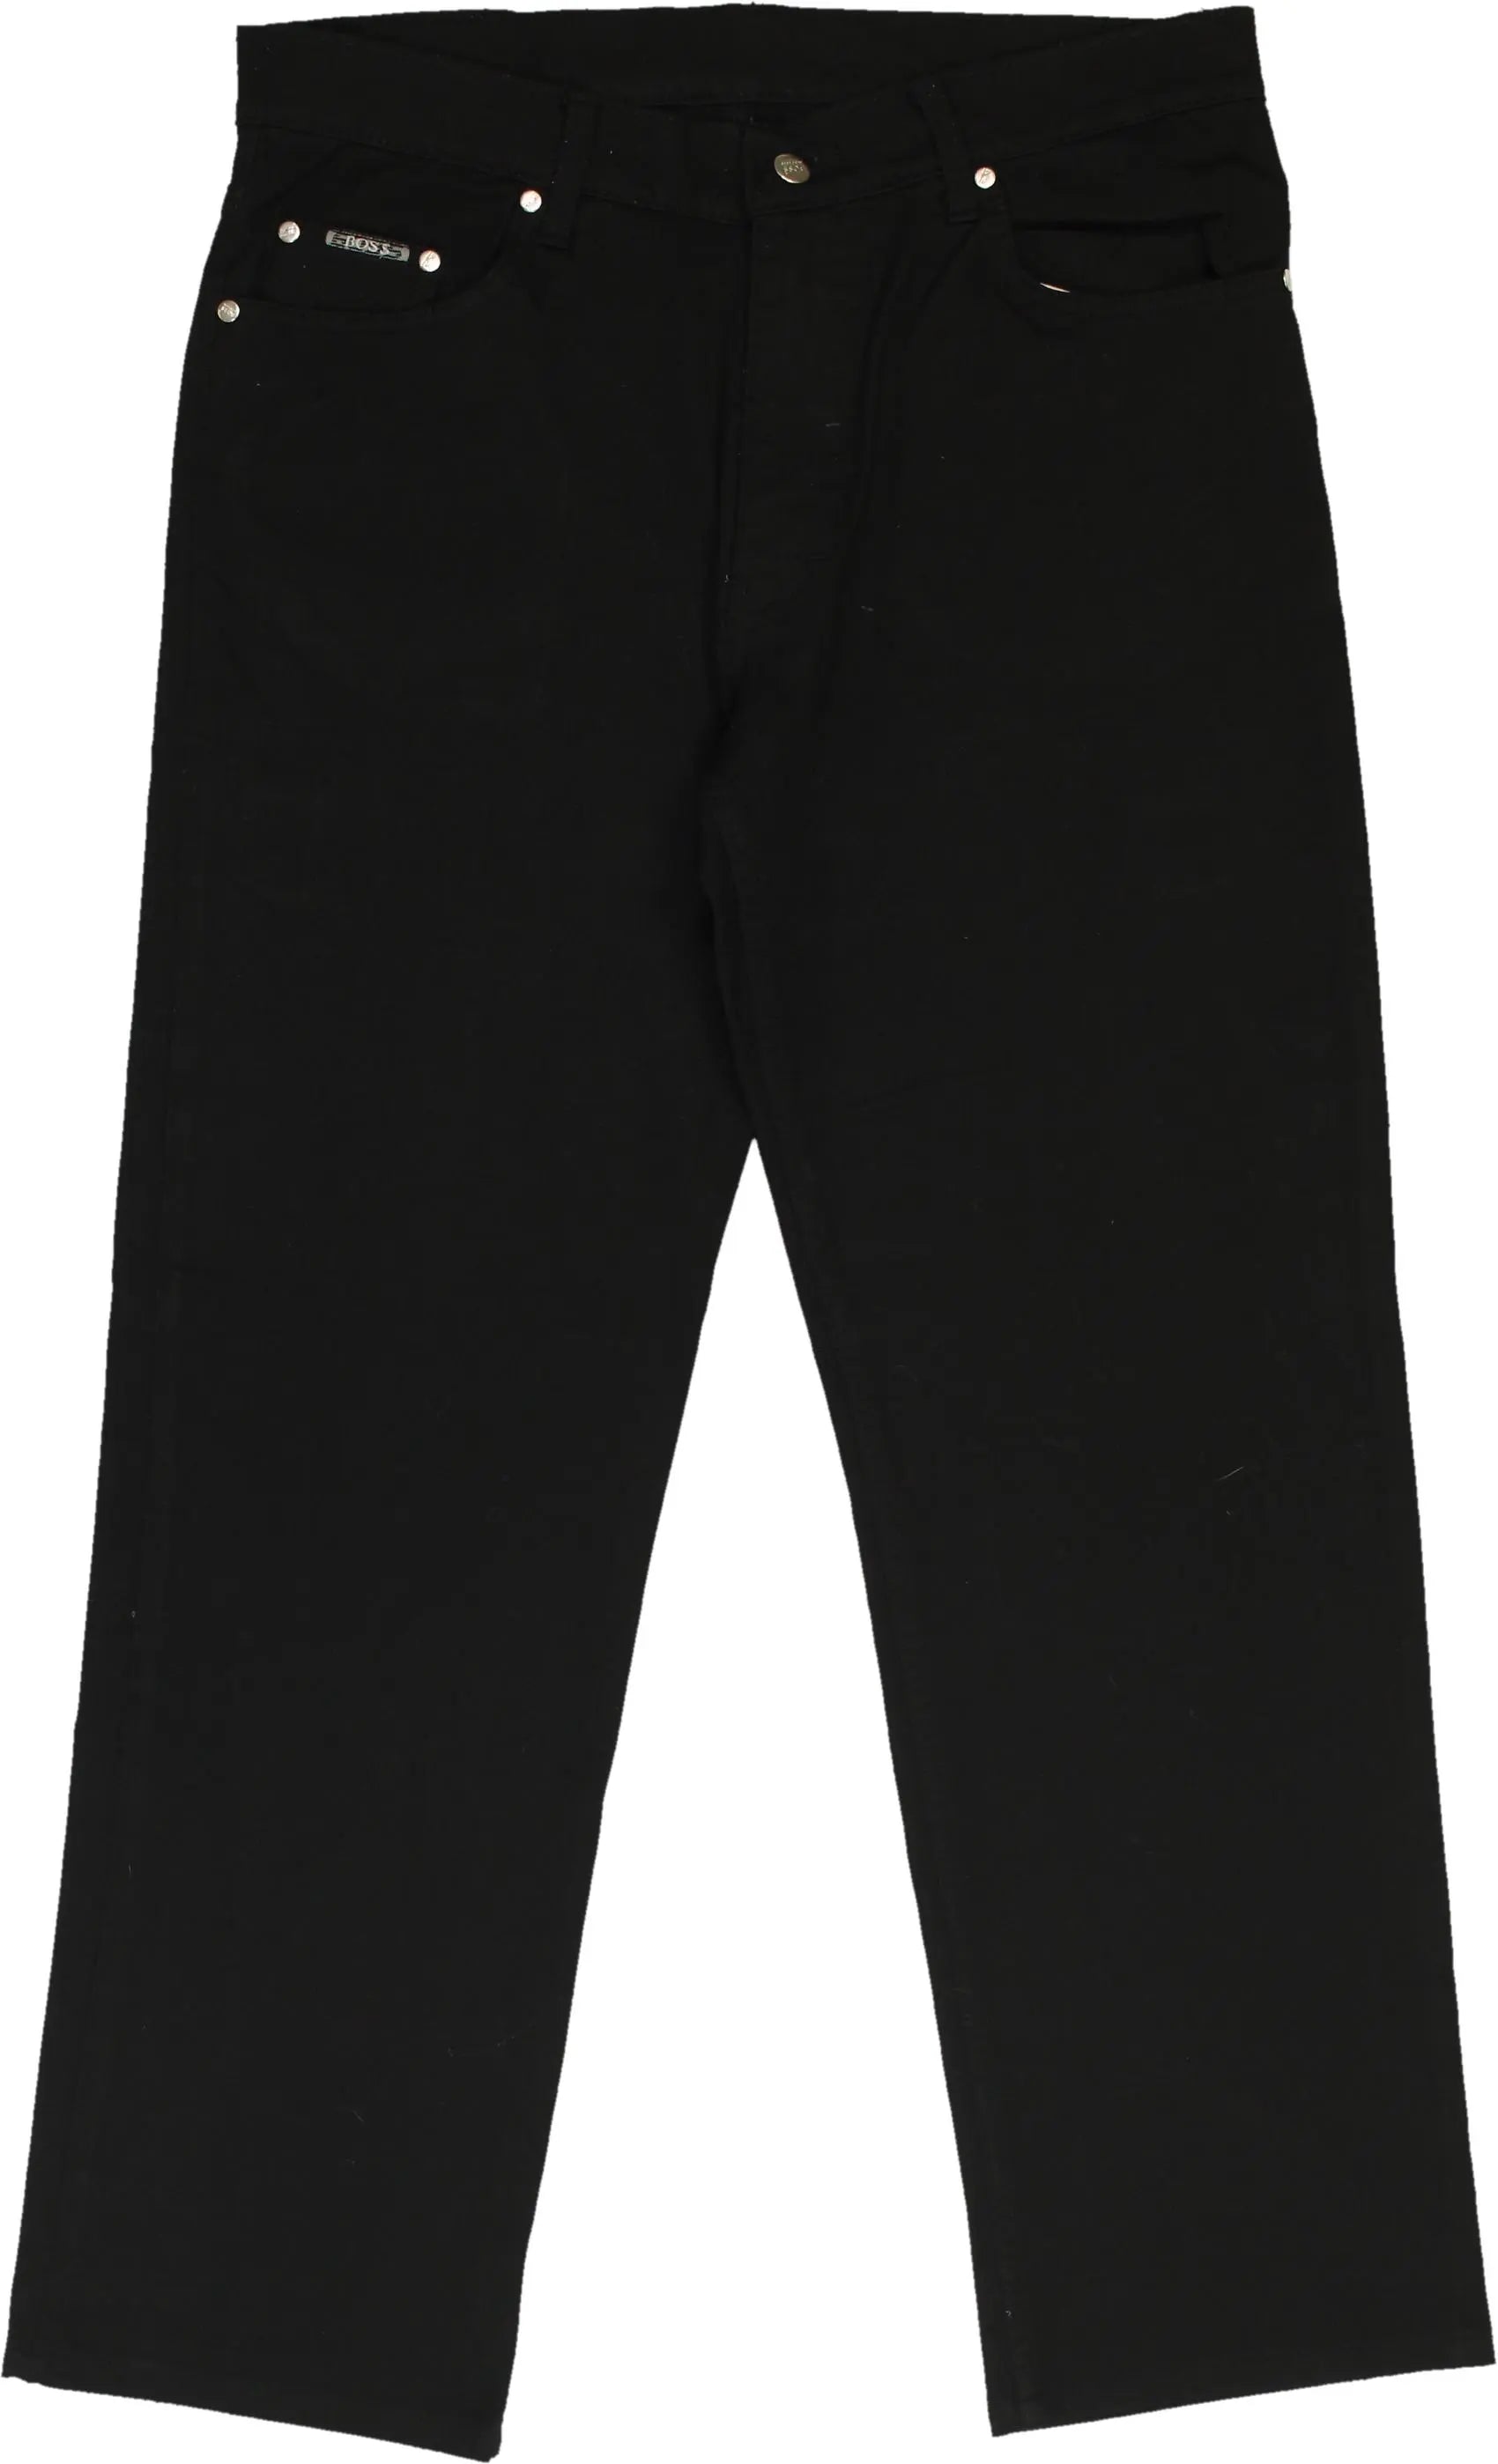 Hugo Boss - Hugo Boss Black Pants- ThriftTale.com - Vintage and second handclothing